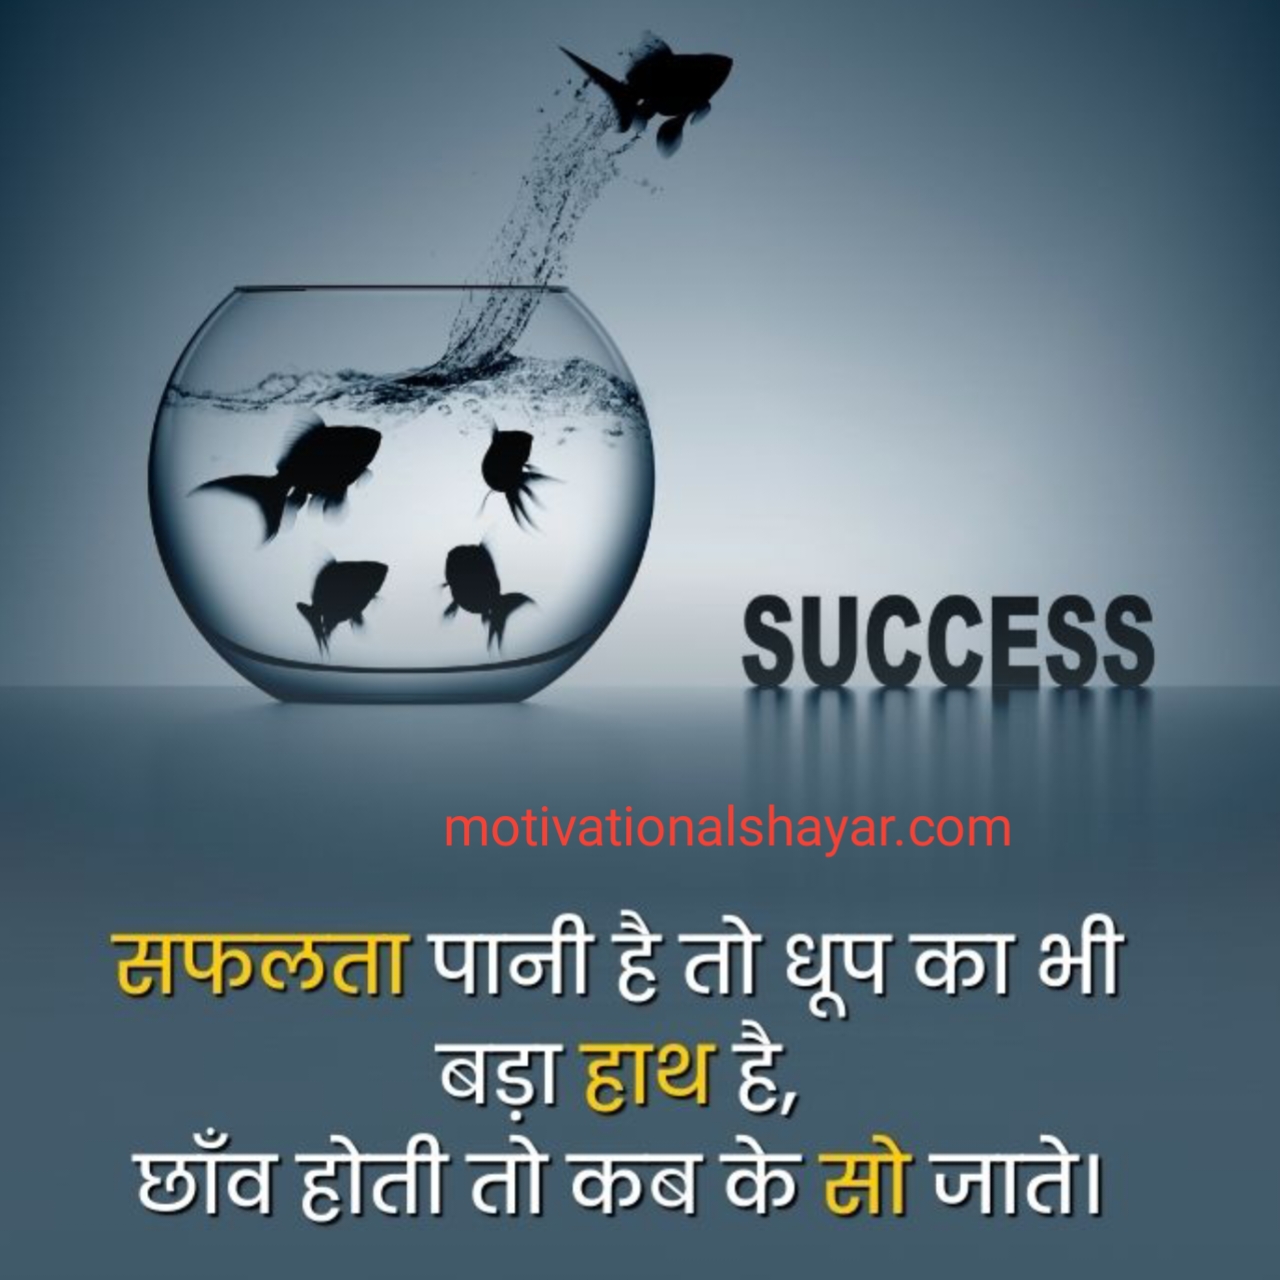 Motivational Quotes In Hindi Shayari | Motivationalshayar.com